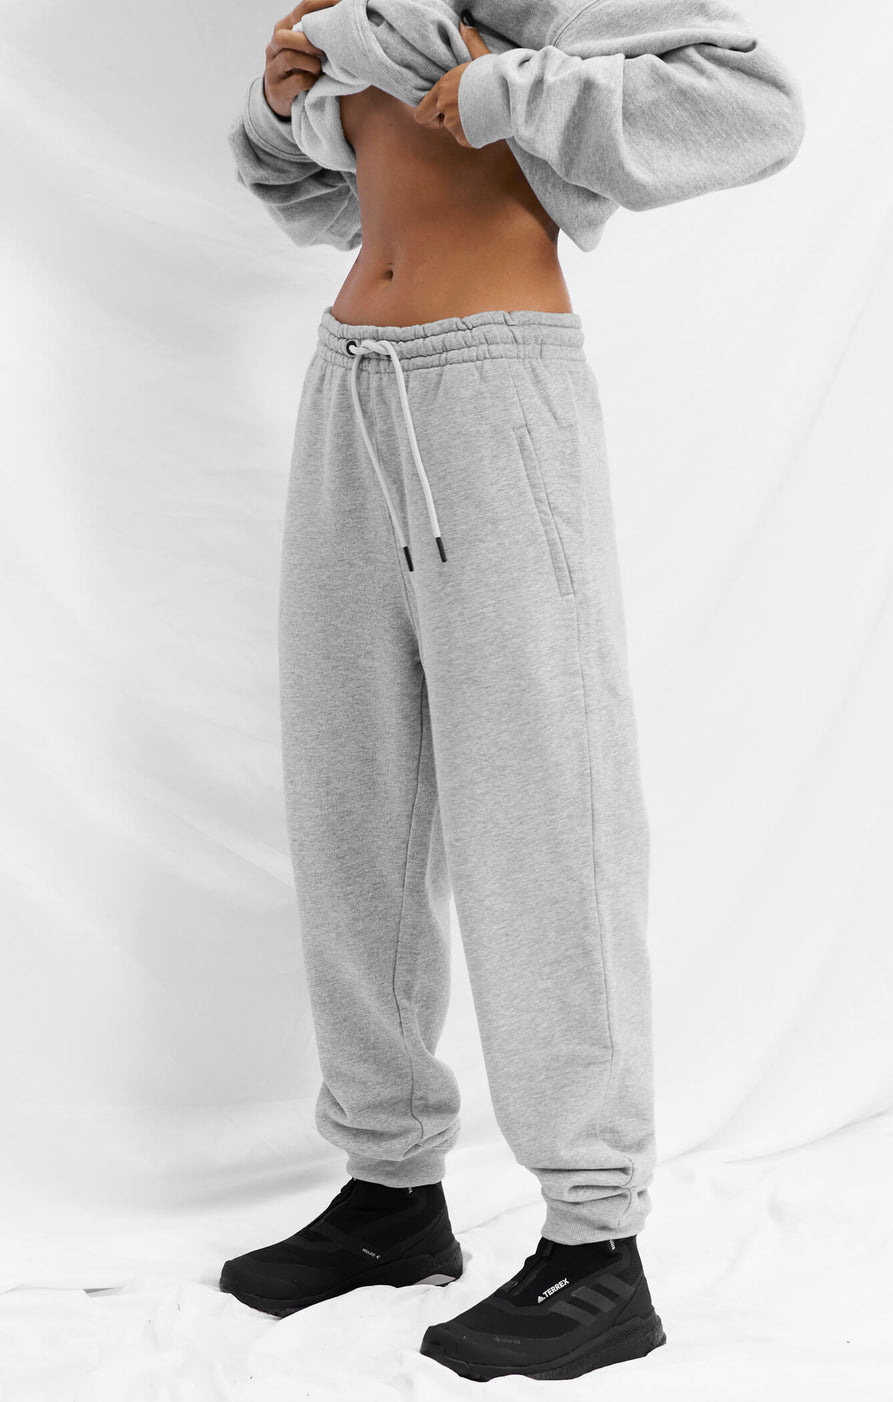 Adidas Track pants women, 100% Cotton, size L, XL, XXL, 3XL, Offer Price  1499/-. | Instagram